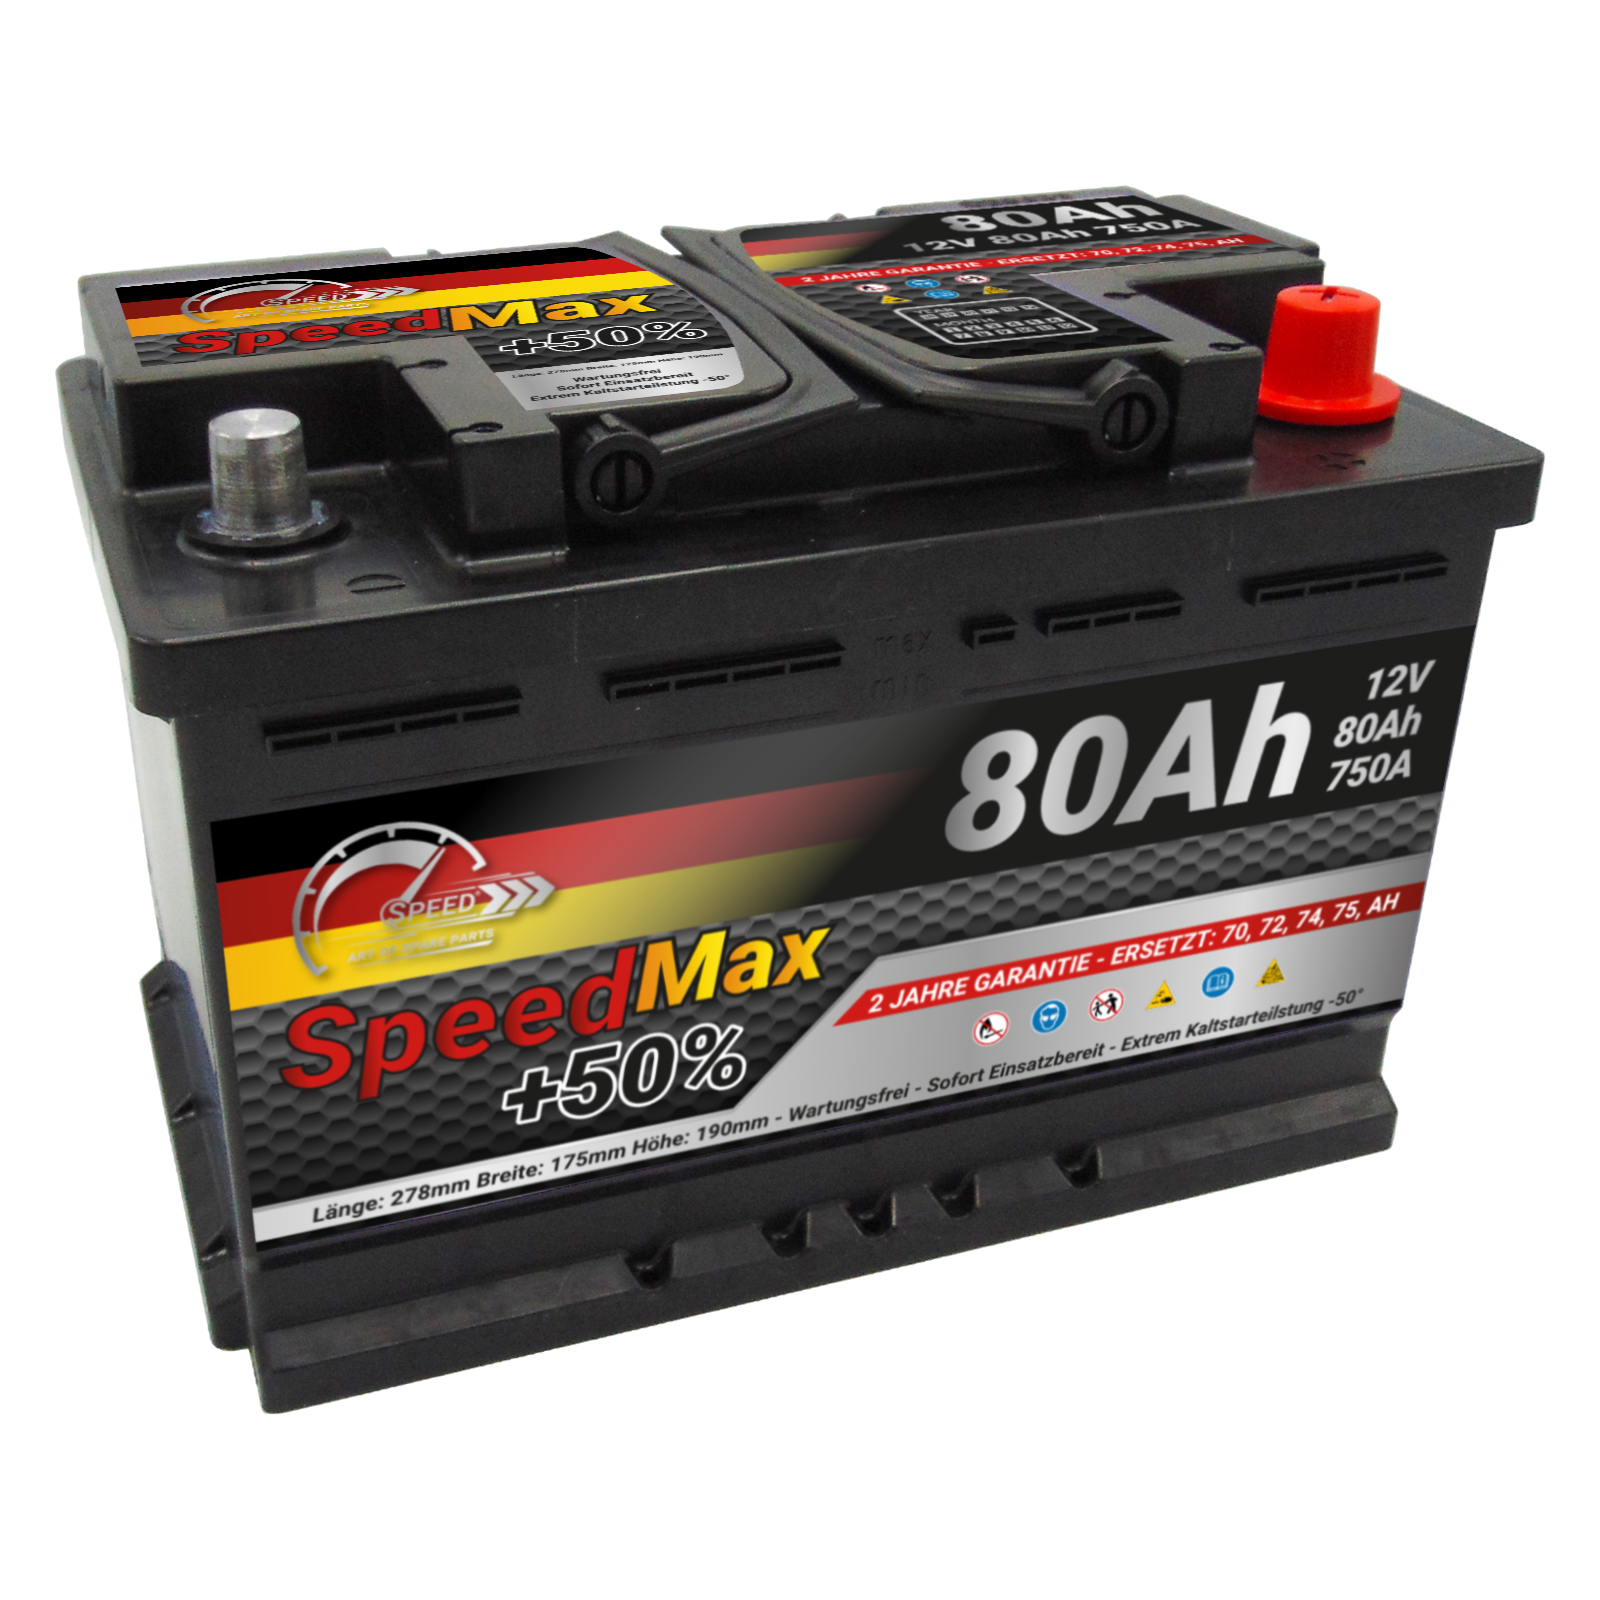 Batteria auto SPEED MAX 80Ah 750A 12V - Ricambi auto SMC